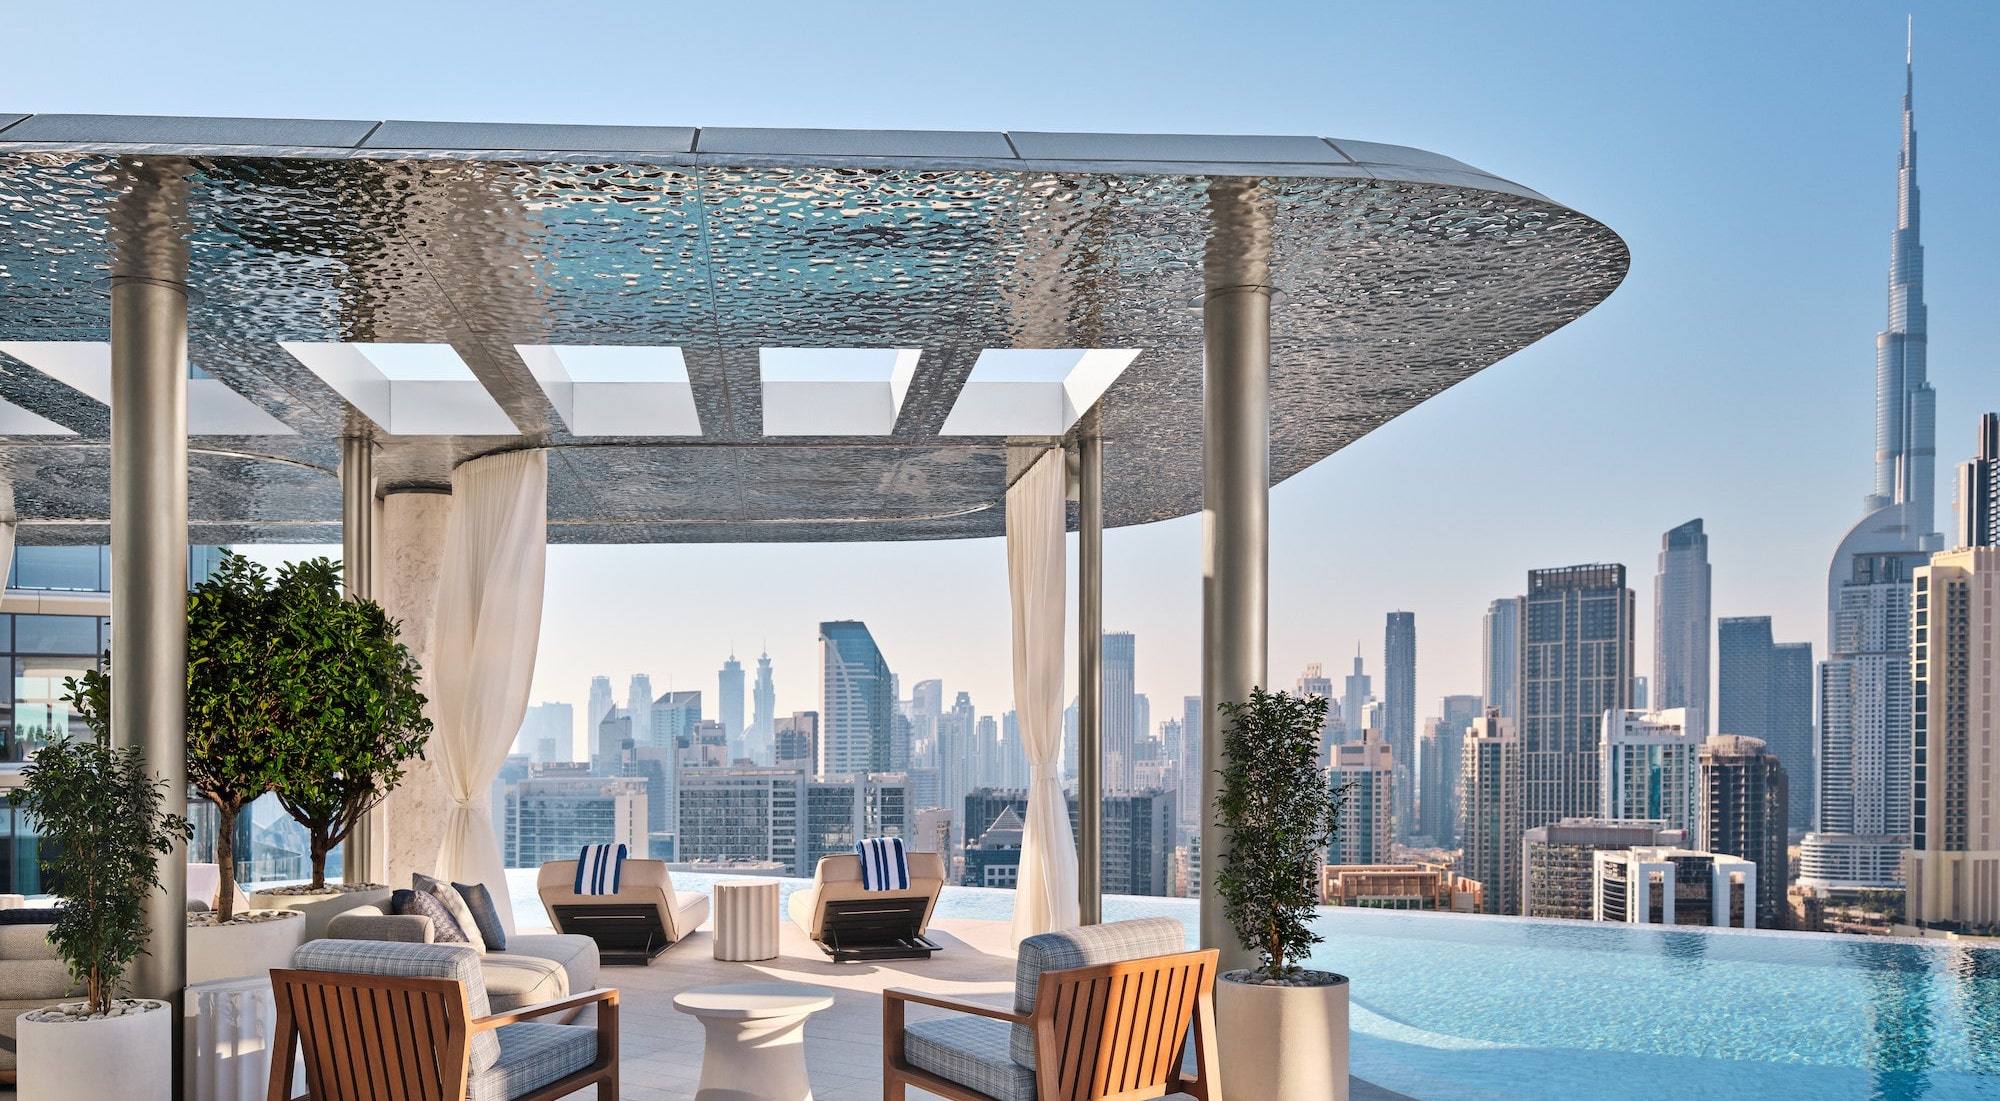 high society by jean imbert pool: best restaurants in dubai with burj khalifa views